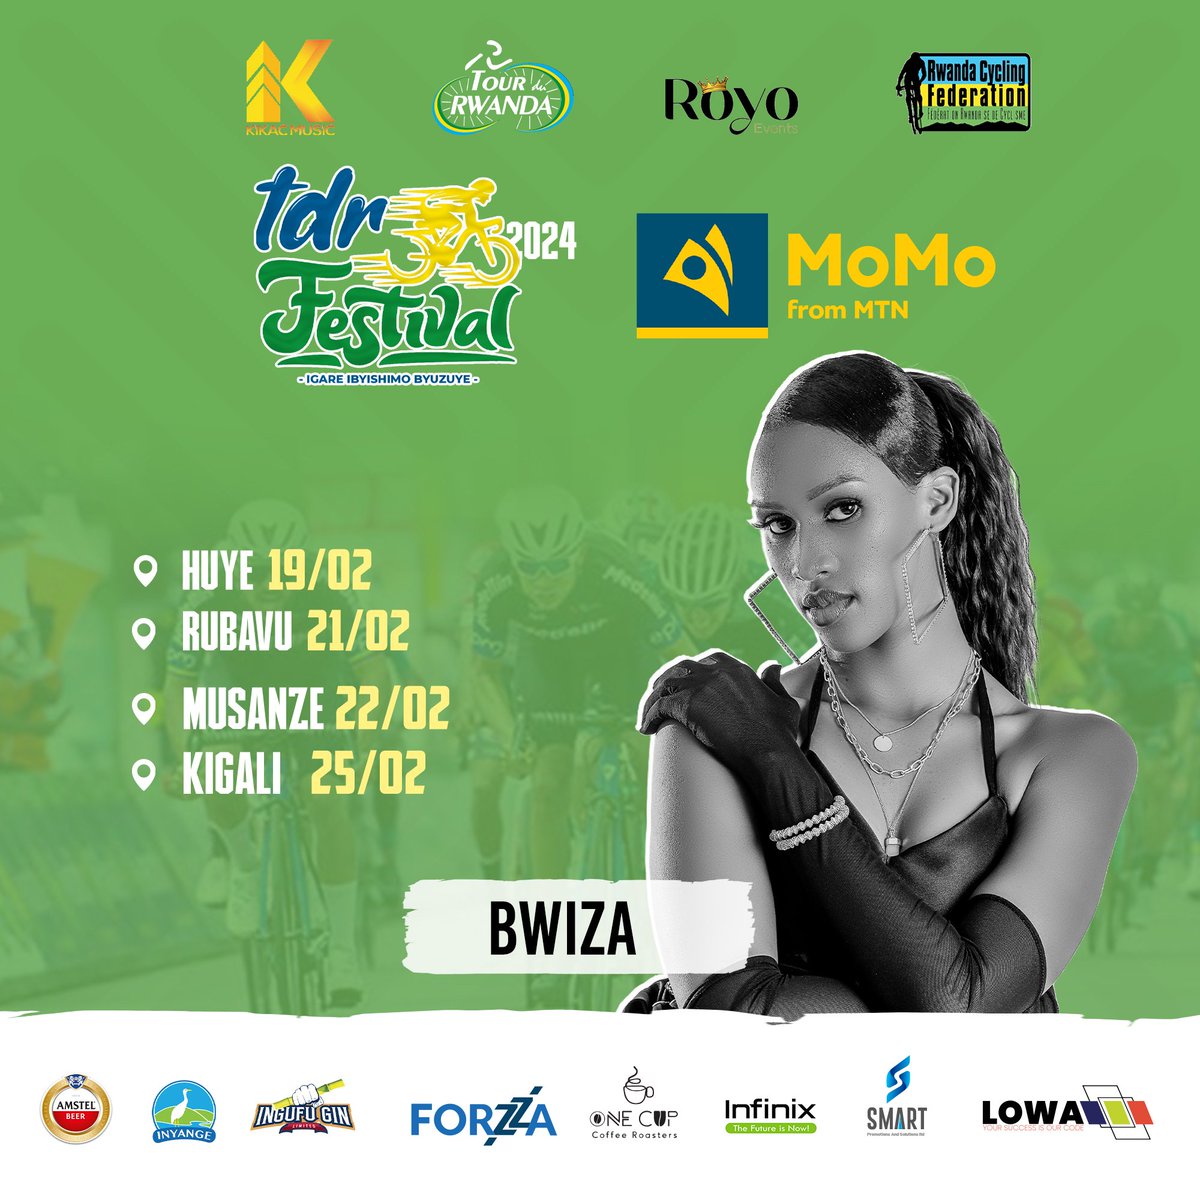 Get ready for electrifying performances by Bwiza, the top female artist, at the 2024 Tour du Rwanda Festival across Huye, Rubavu, Musanze, and Kigali! Special thanks to MTN Rwanda, Bralirwa, Inyange, Infinix, Ingufu Gin Ltd, Forzzabet, and Lawa Ltd for making it happen! 🎤🇷🇼